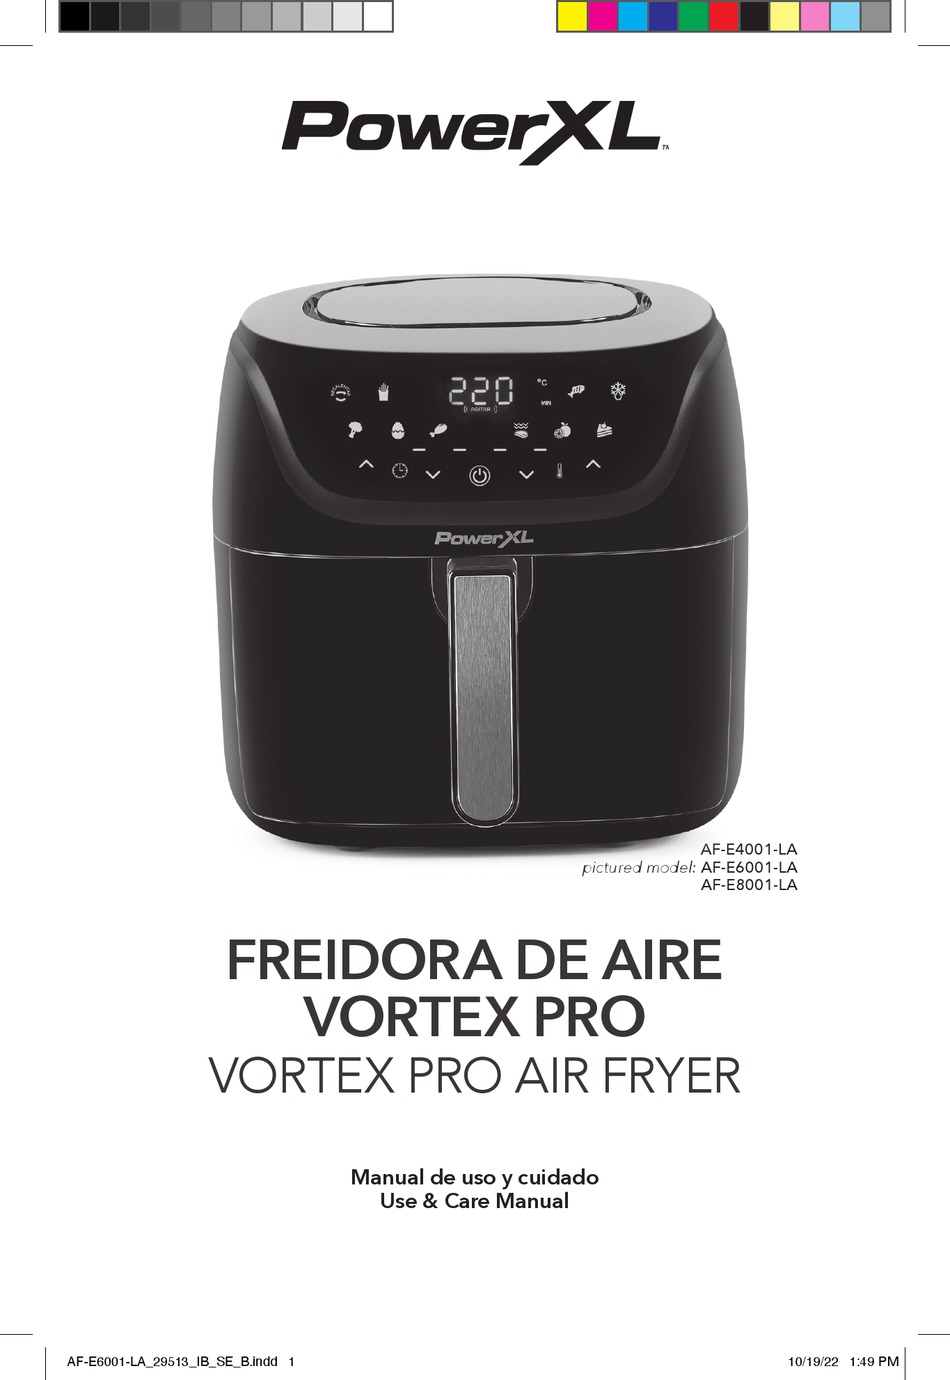 PowerXL Vortex Pro AF-E4001 4-Quart Air Fryer